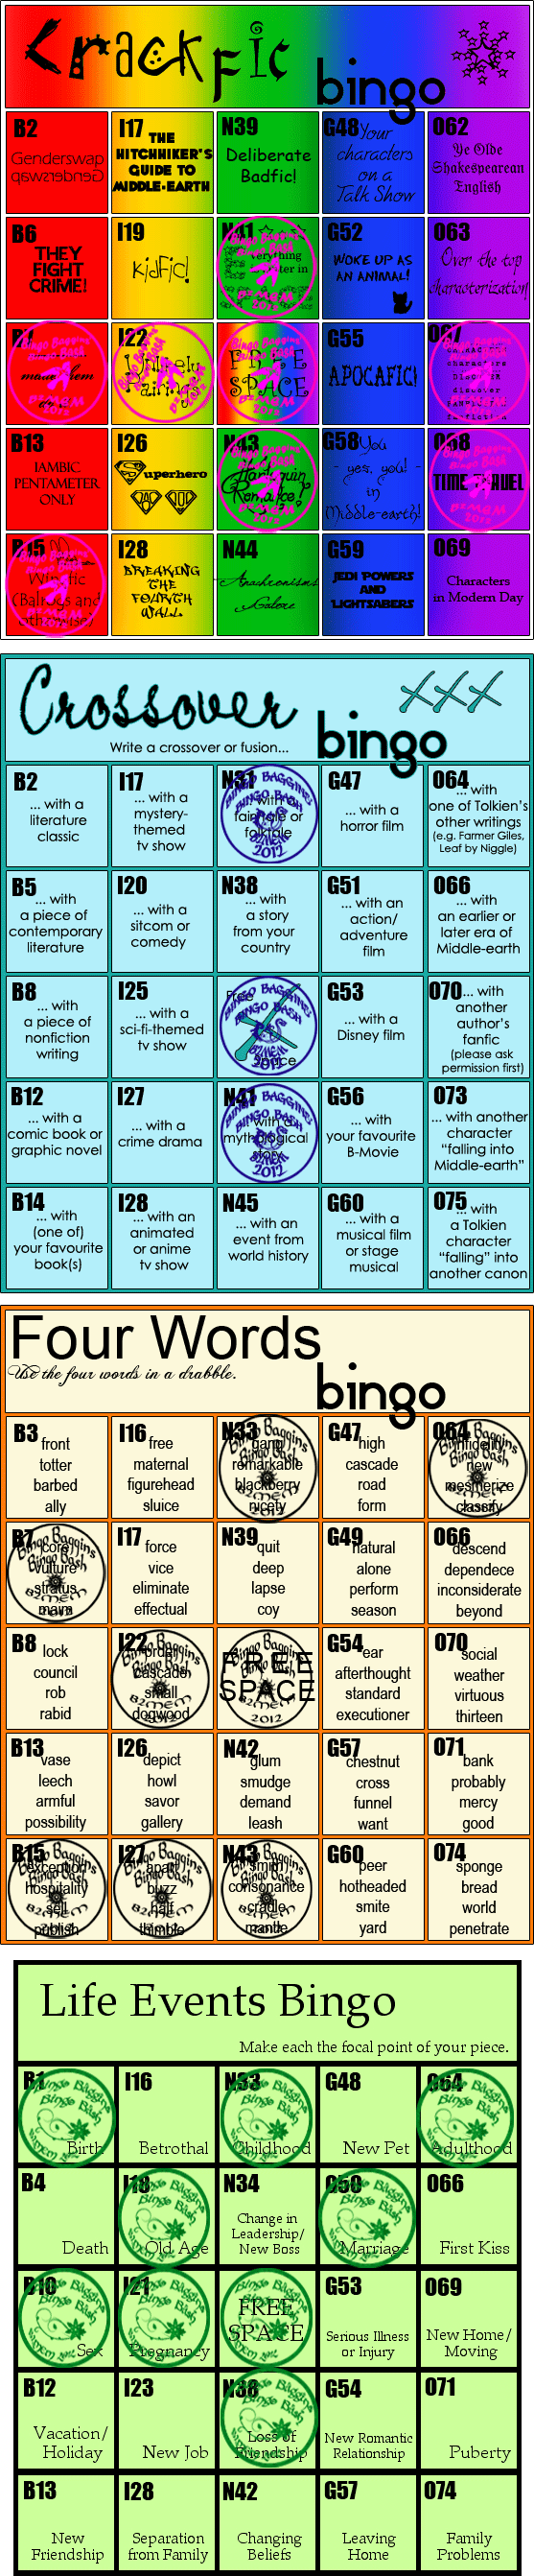 Grey_Wonderer's Bingo Cards